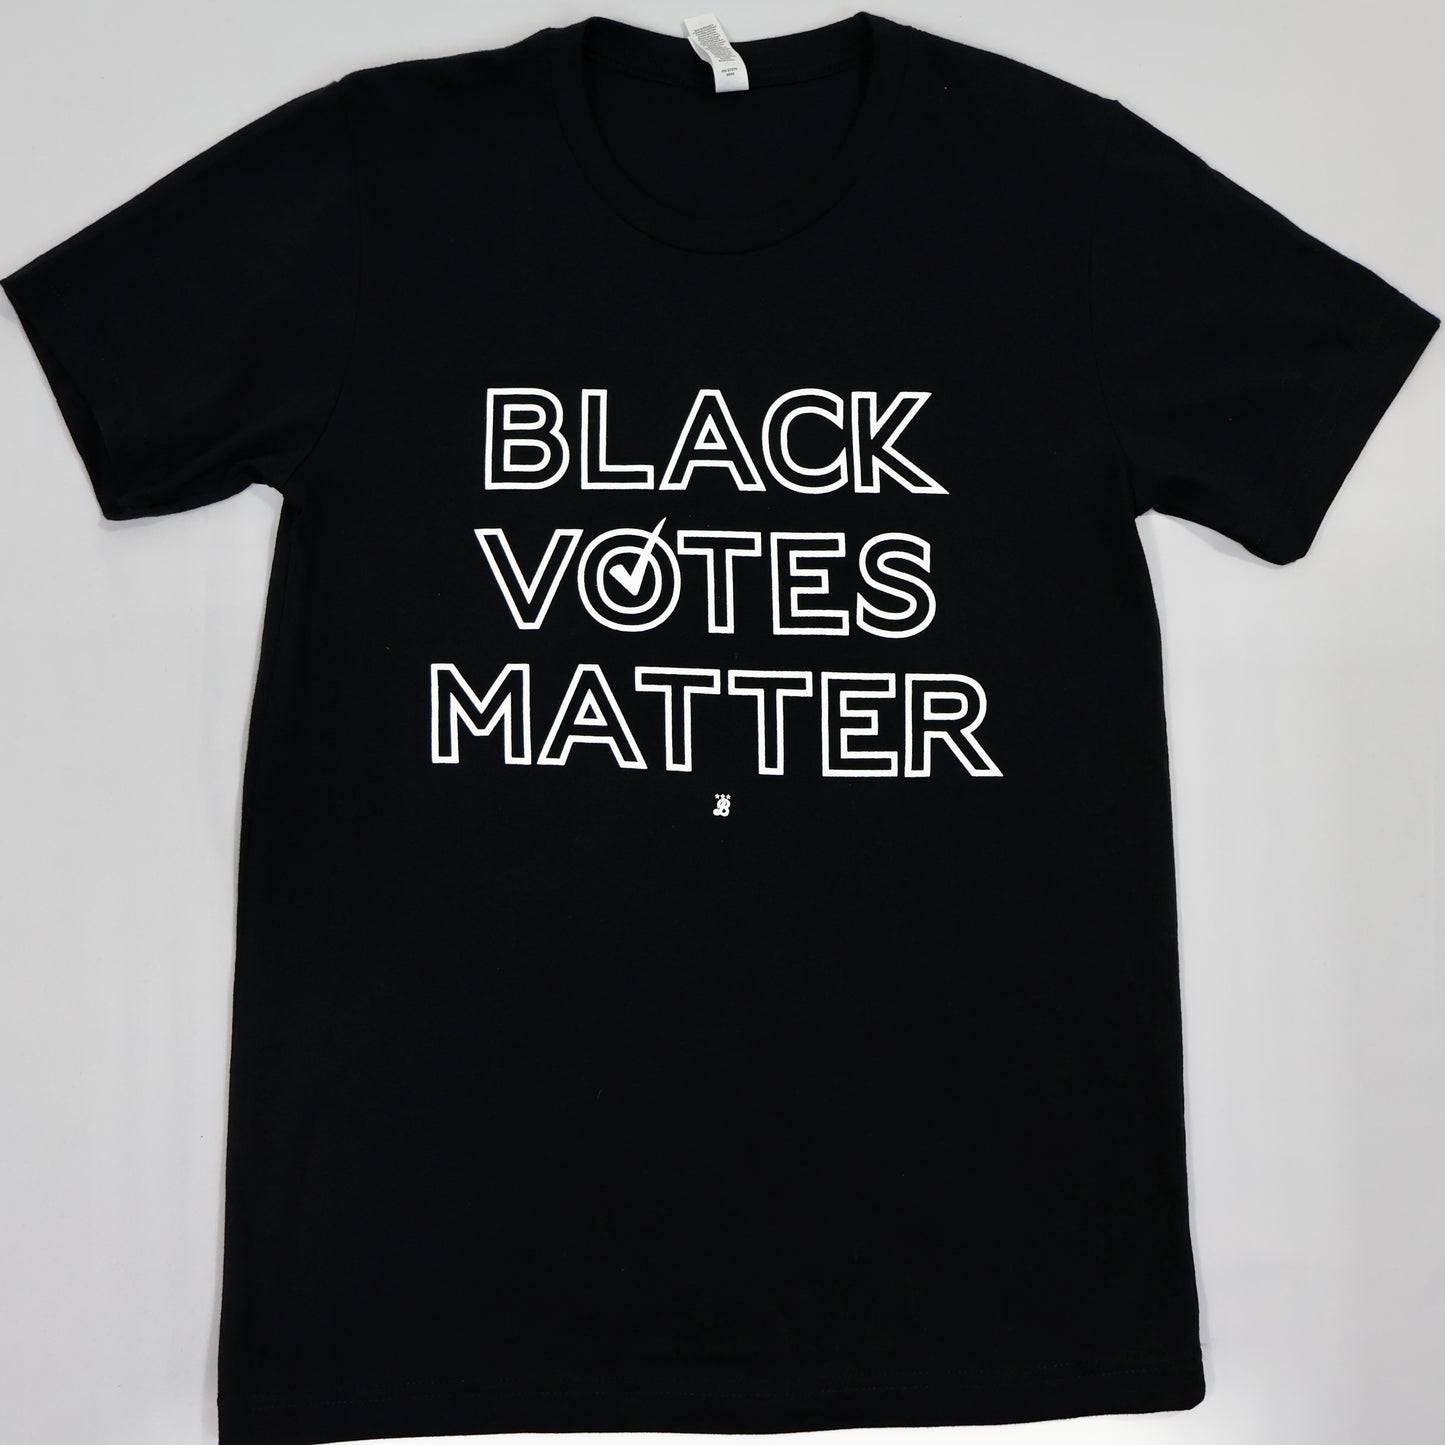 Unisex Black Votes Matter T-shirt